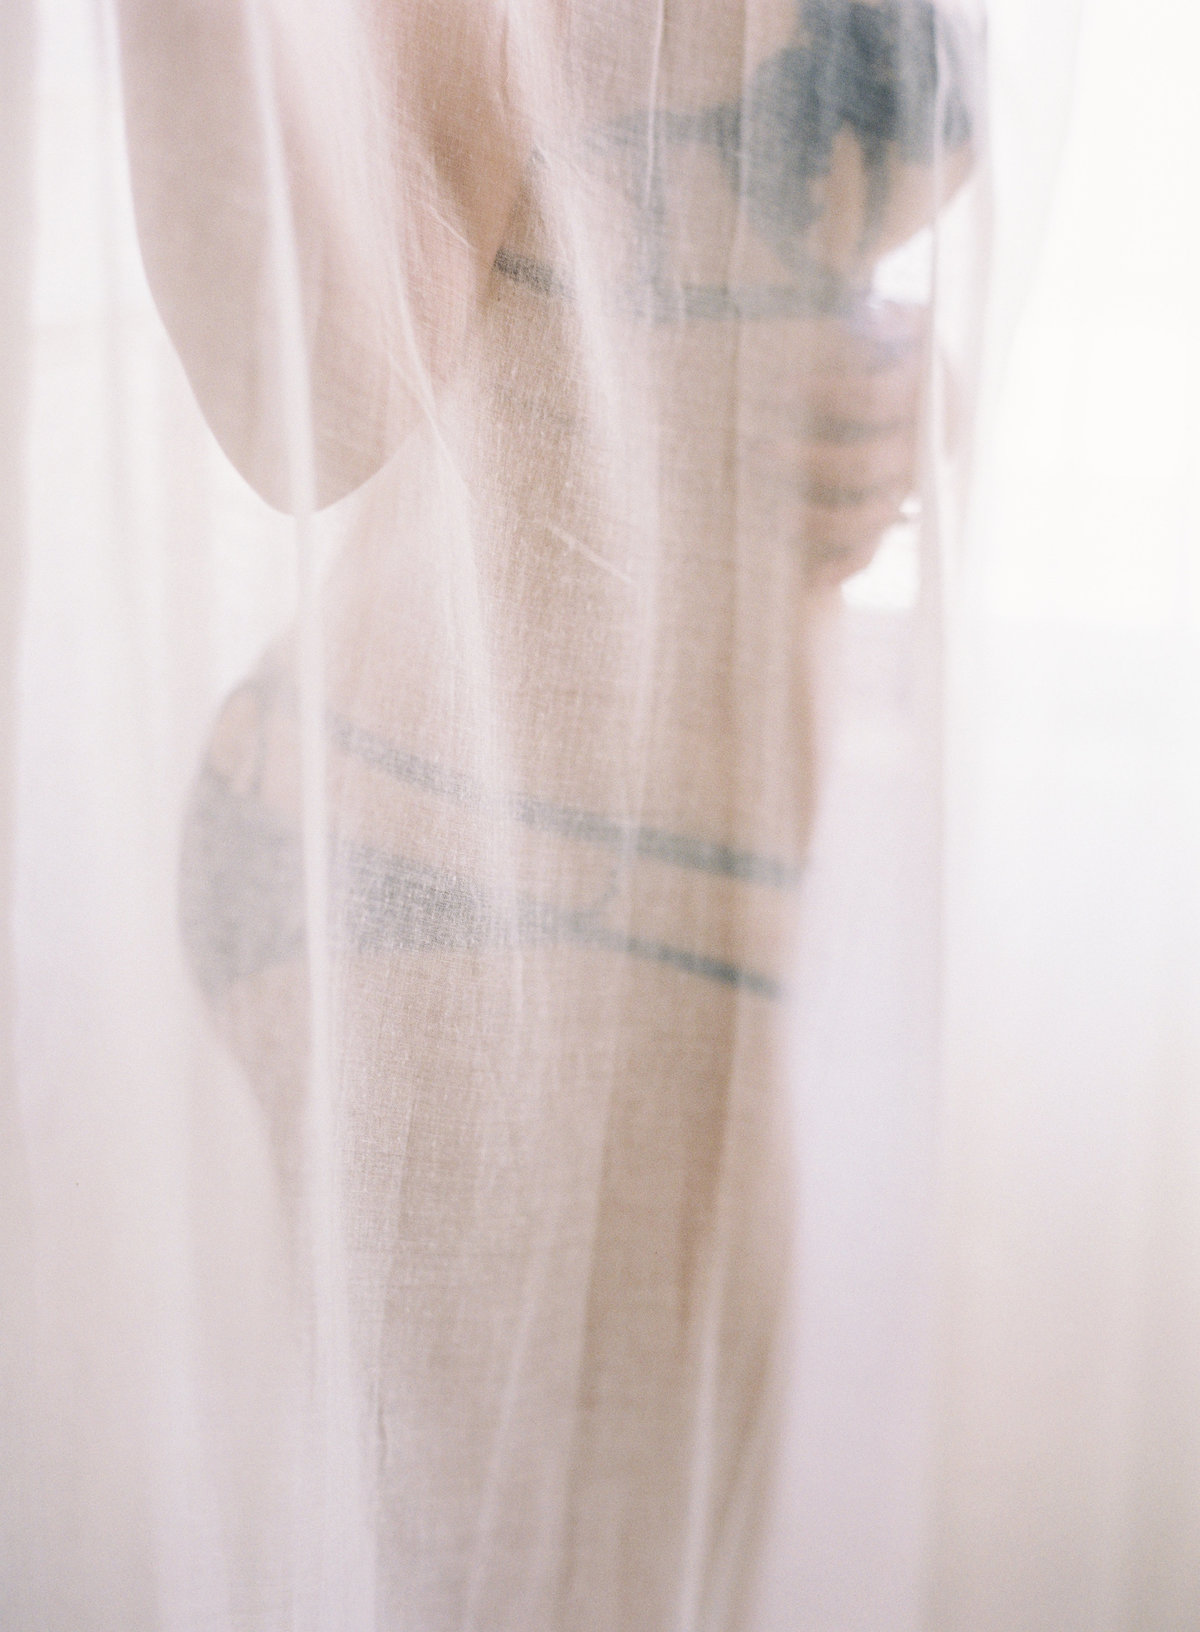 best boudoir photography sydney 0119